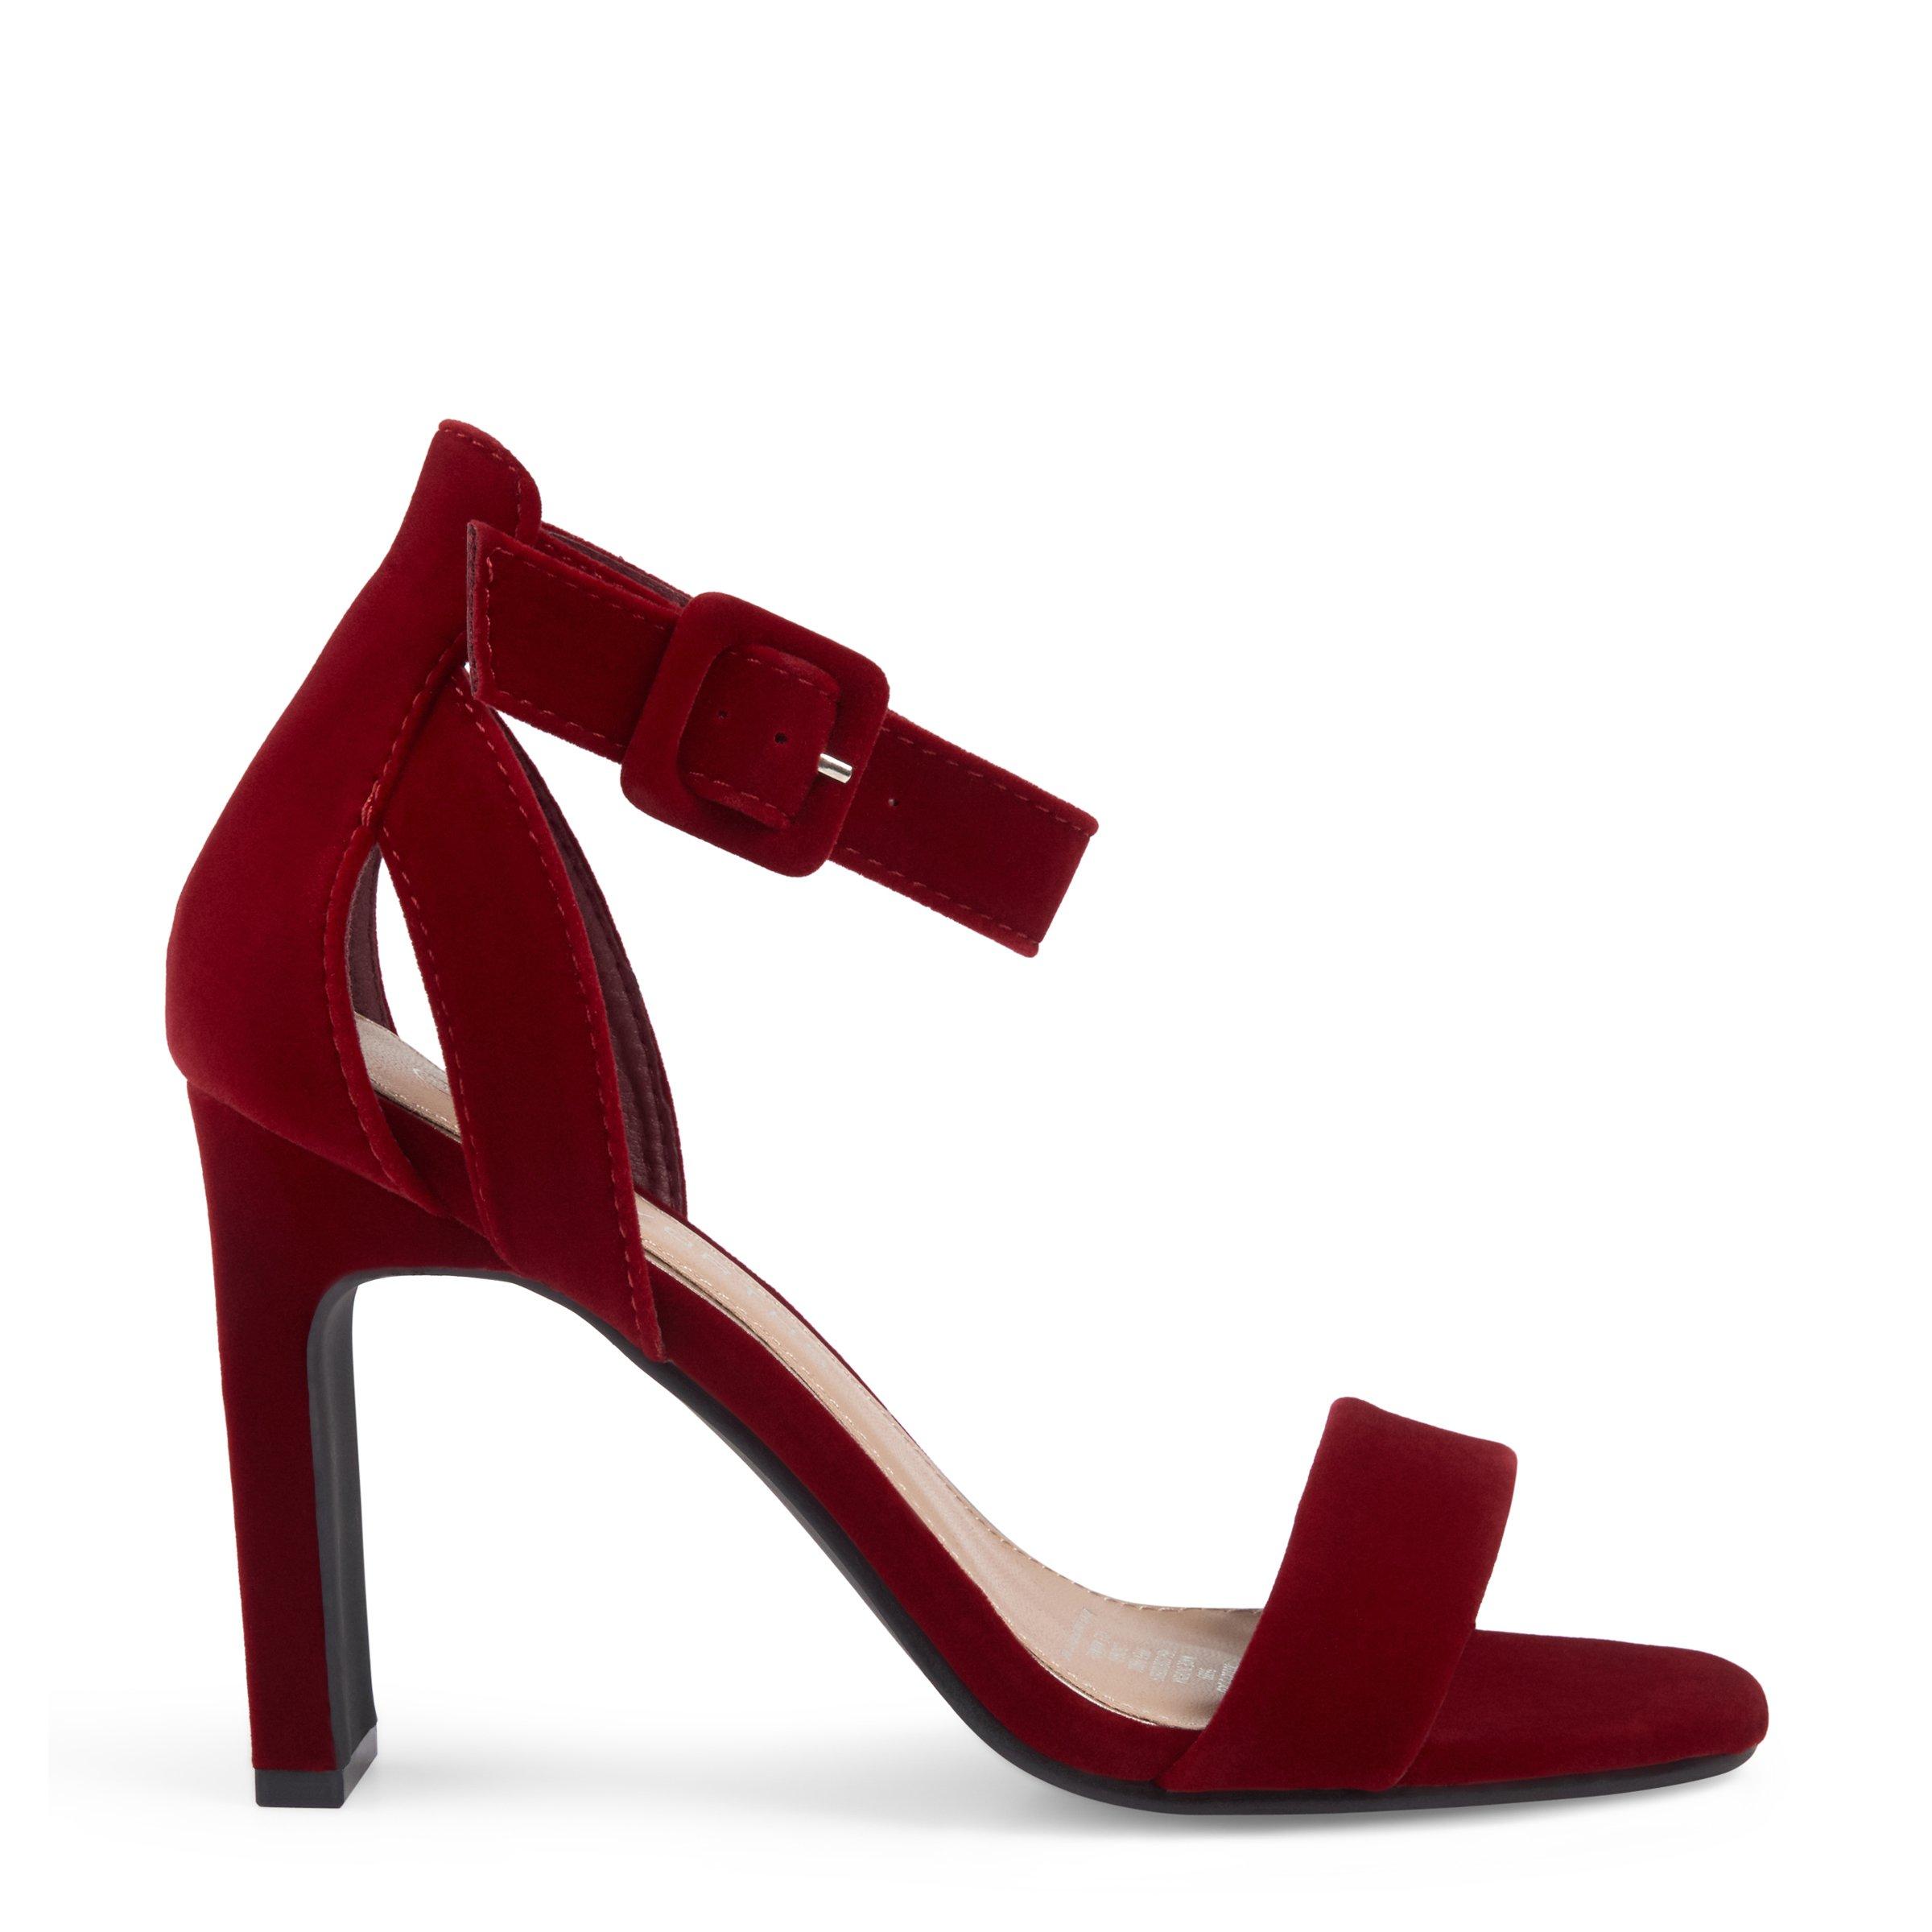 Buy Truworths Red Blocked Heel Shoe Online | Truworths